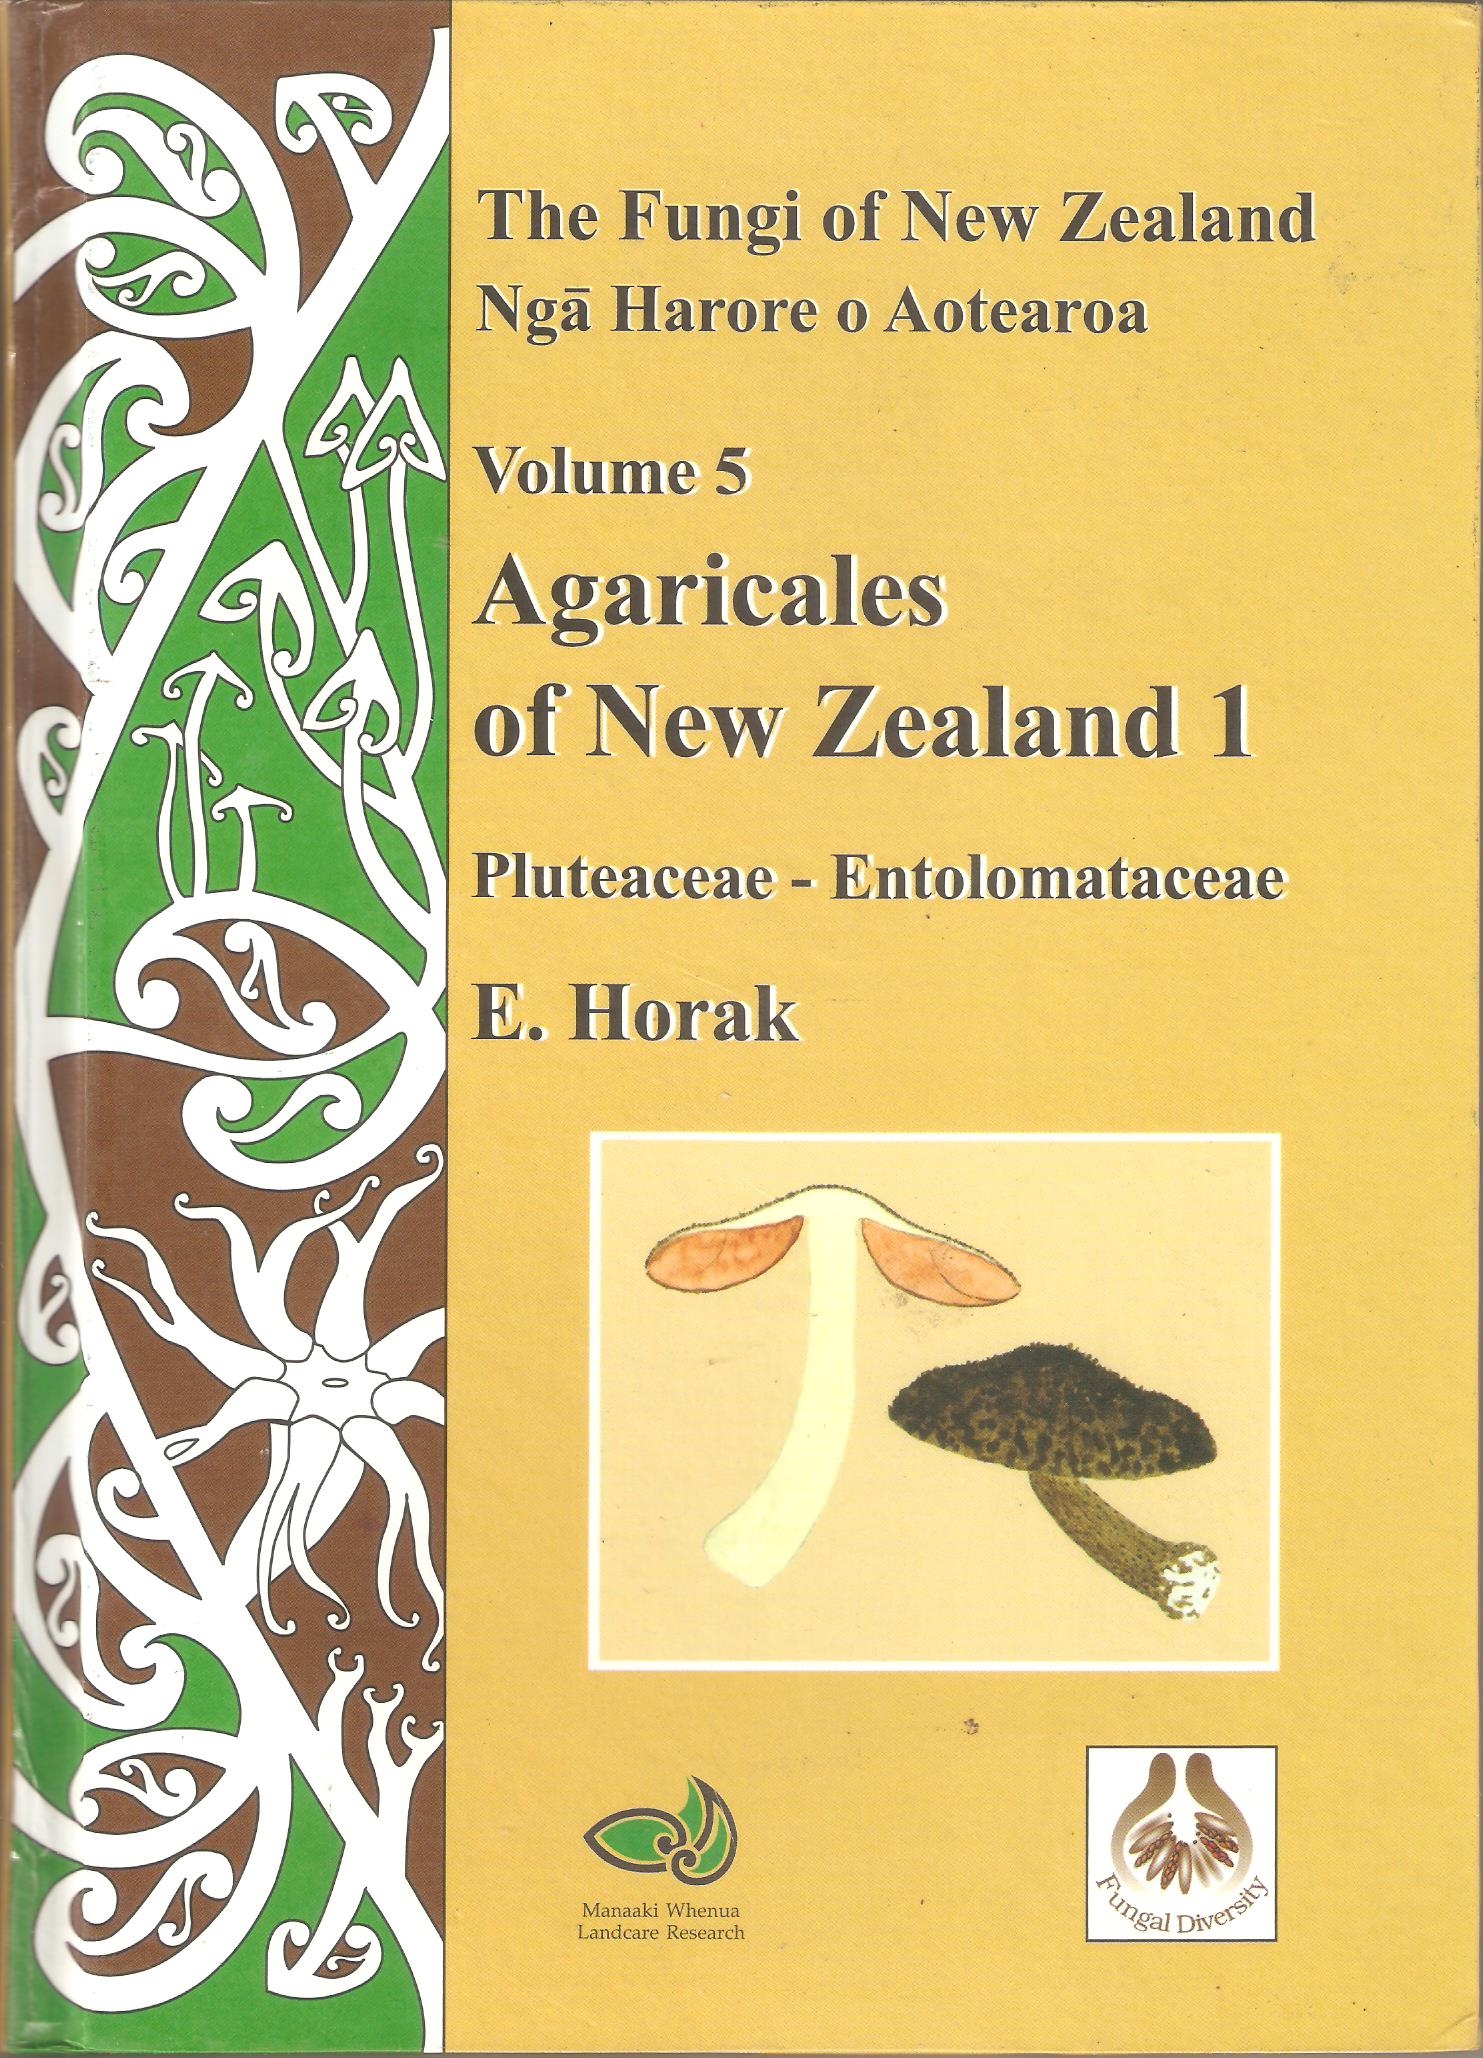 Agaricales of New Zealand 1: Pluteaceae - Entolomataceae